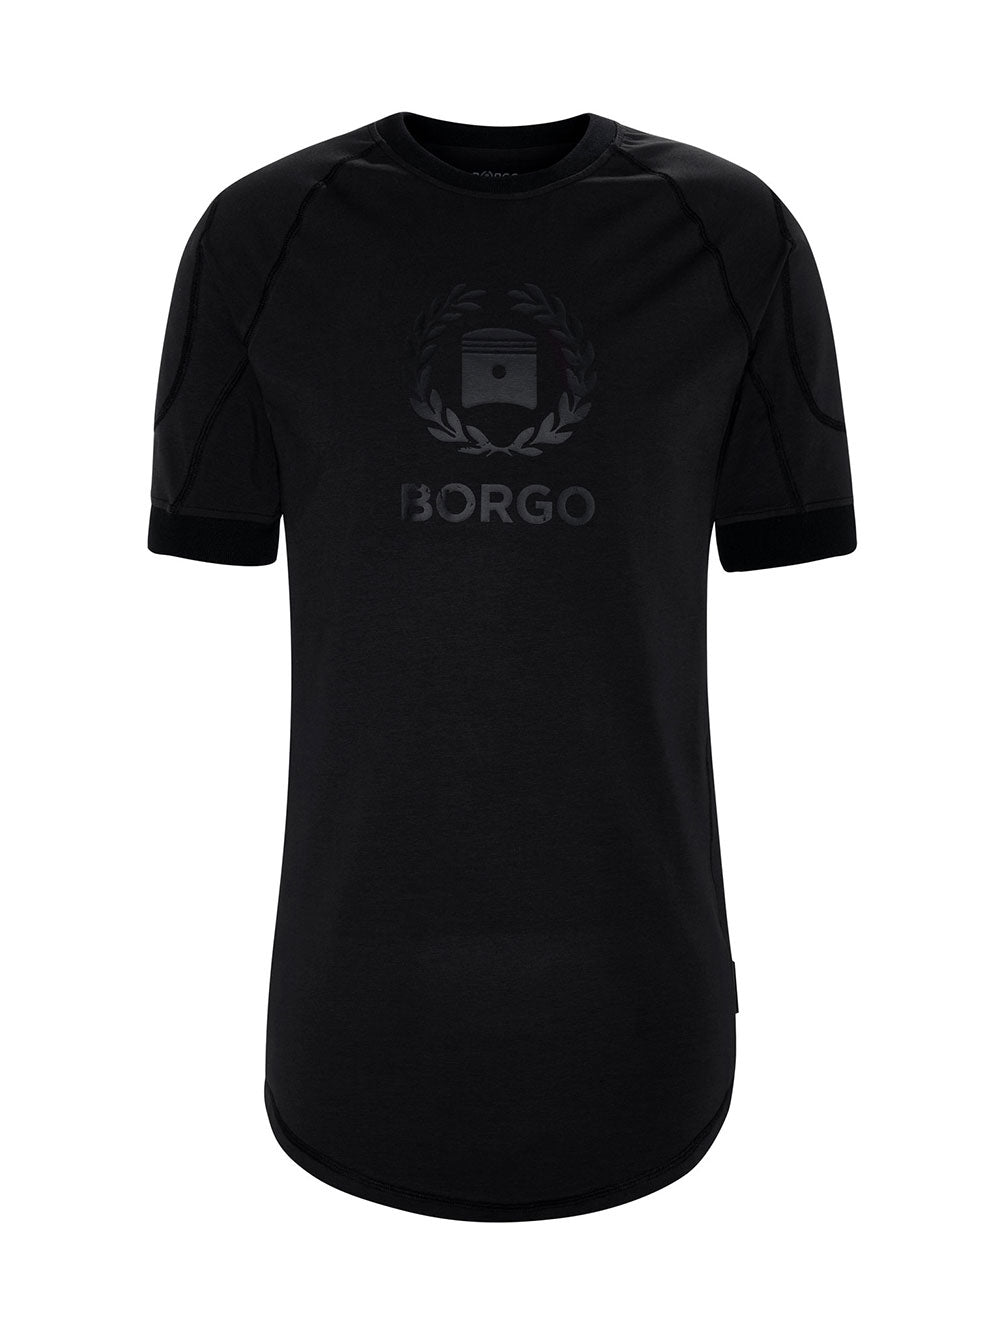 BORGO Siracusa Diablo Nero T-Shirt